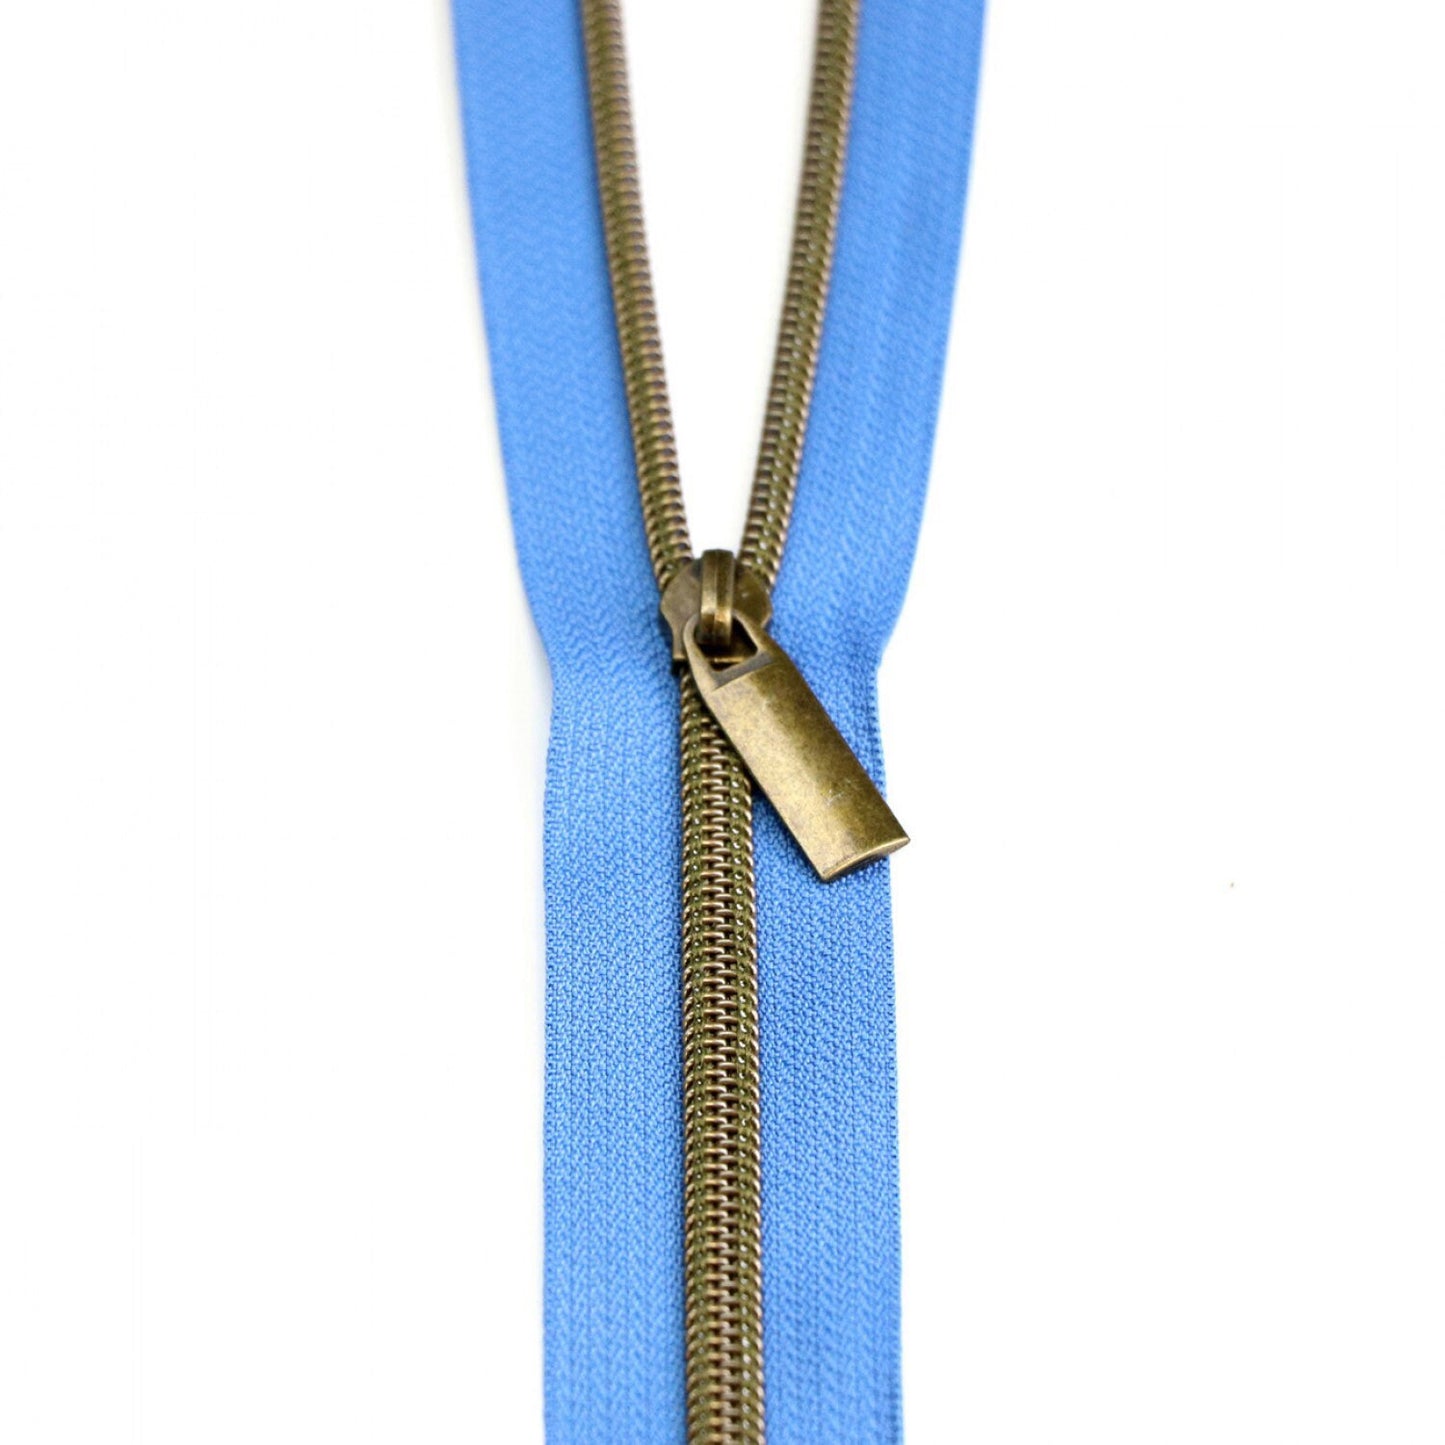 Blue Zipper Tape - Sallie Tomato Zipper - Blue Jean Zipper - Blue Tape - Choose Teeth Color - 3 Yards - 108 inches